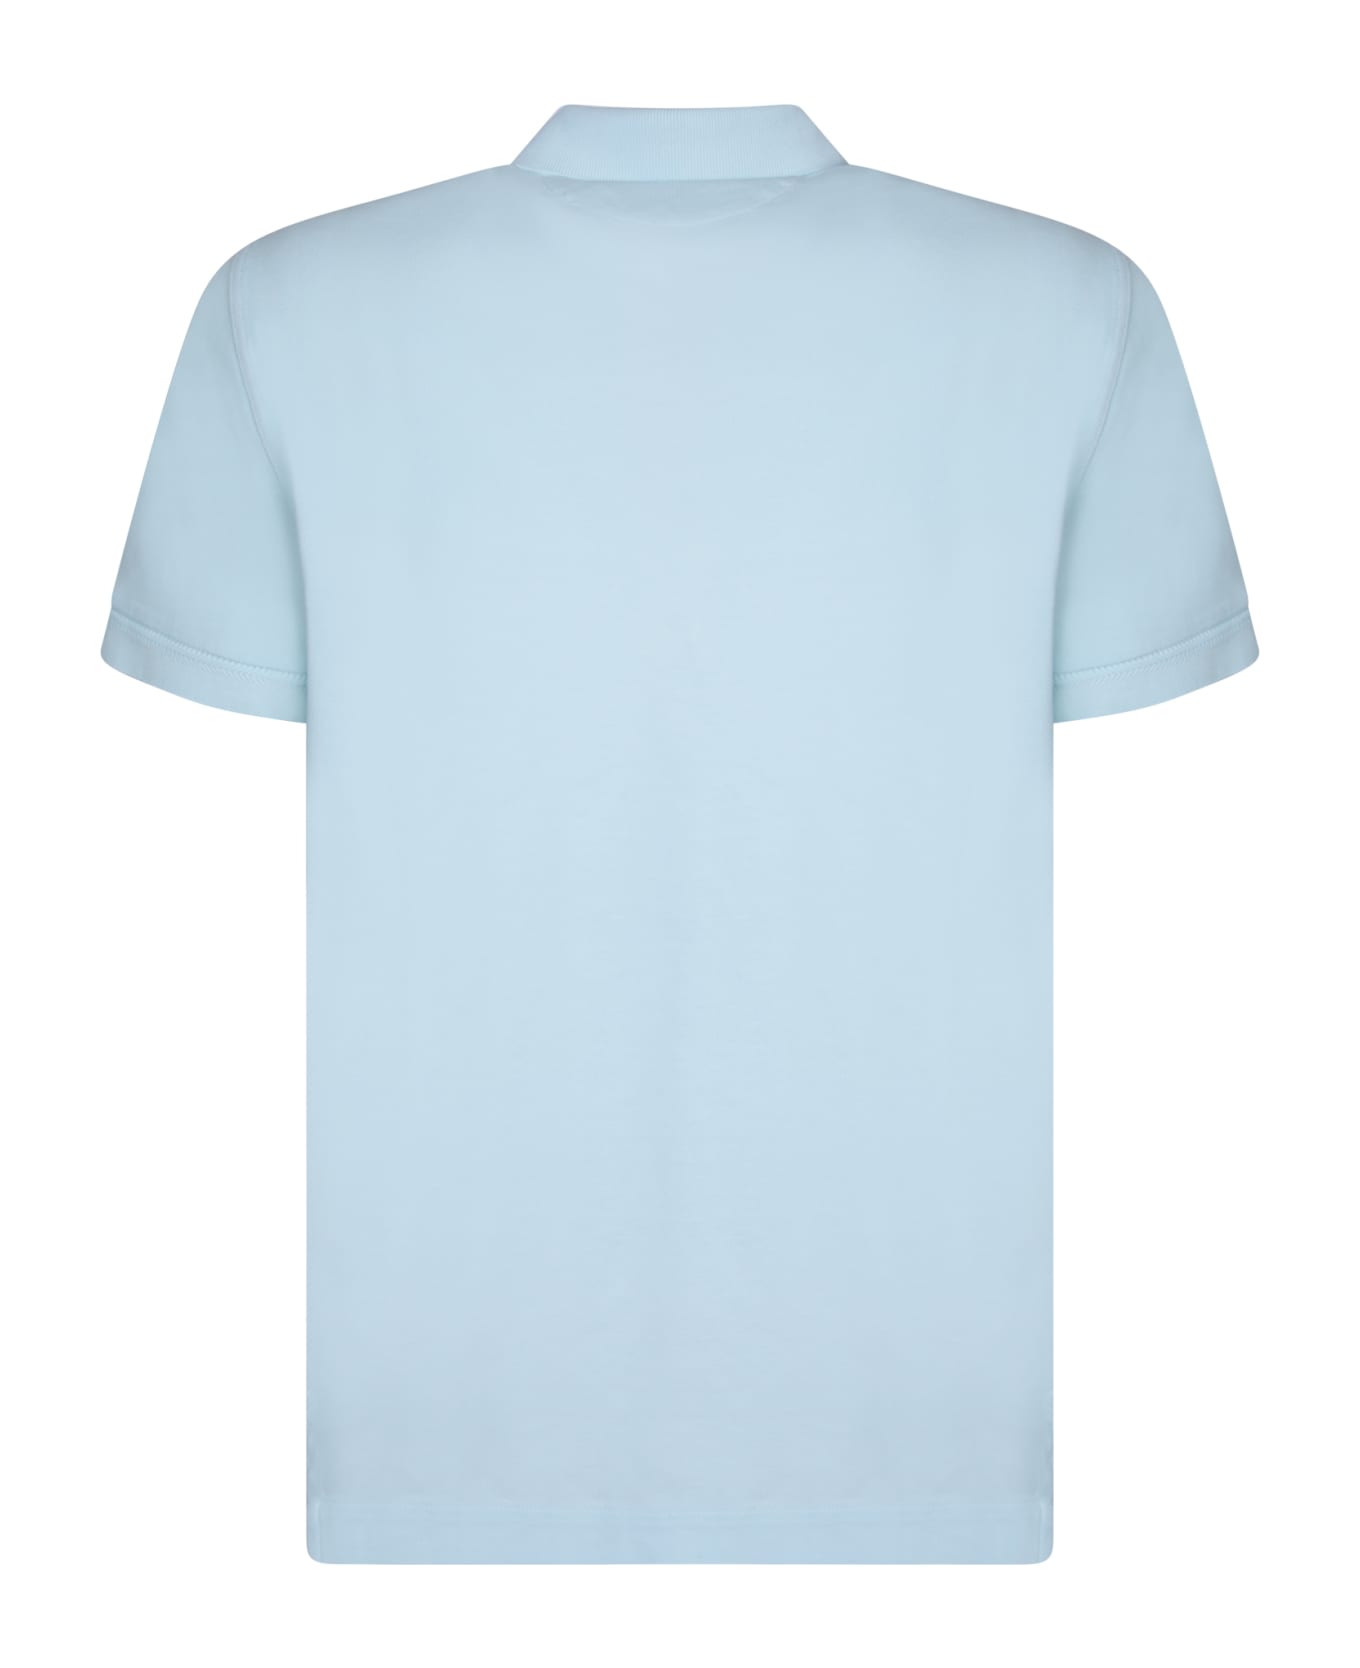 Tom Ford 'tennis Piquet' Polo Shirt - Light Blue